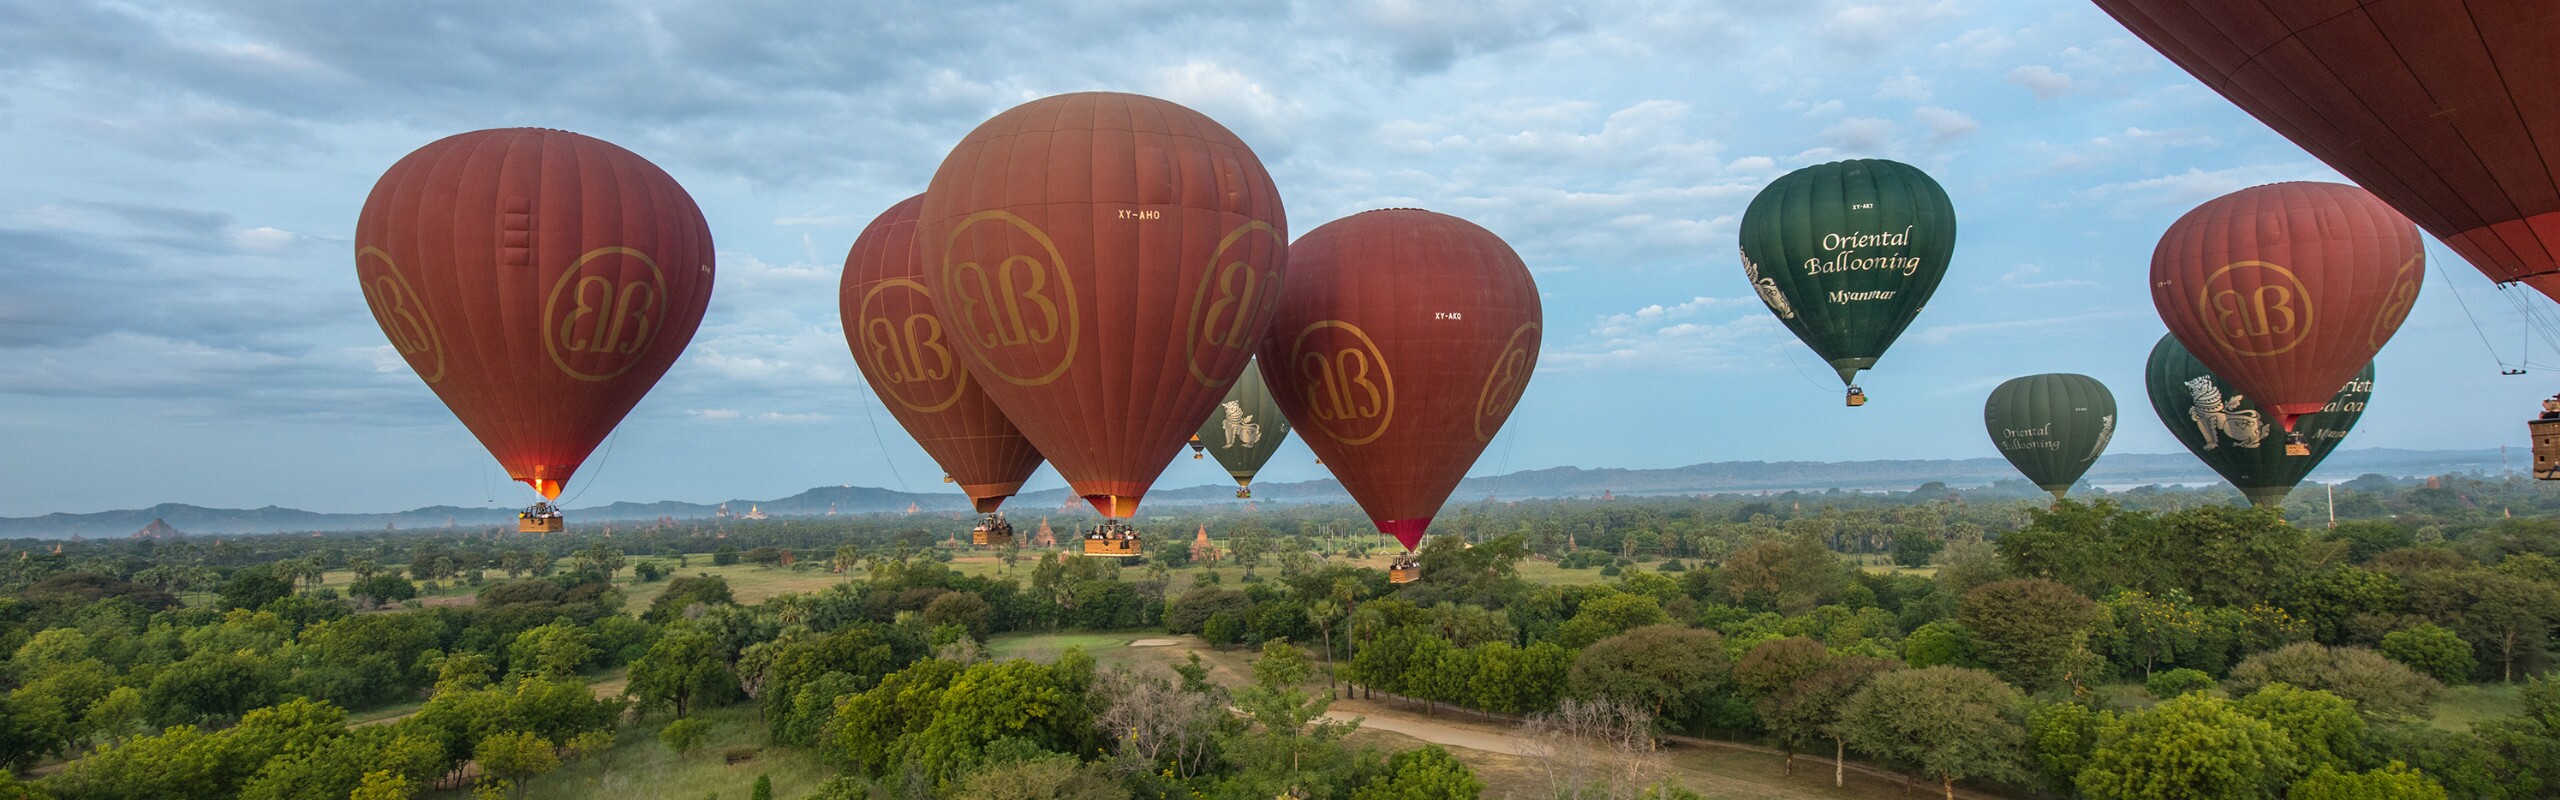 Balloon Flights Over Bagan - Fly towards the Rising Sun